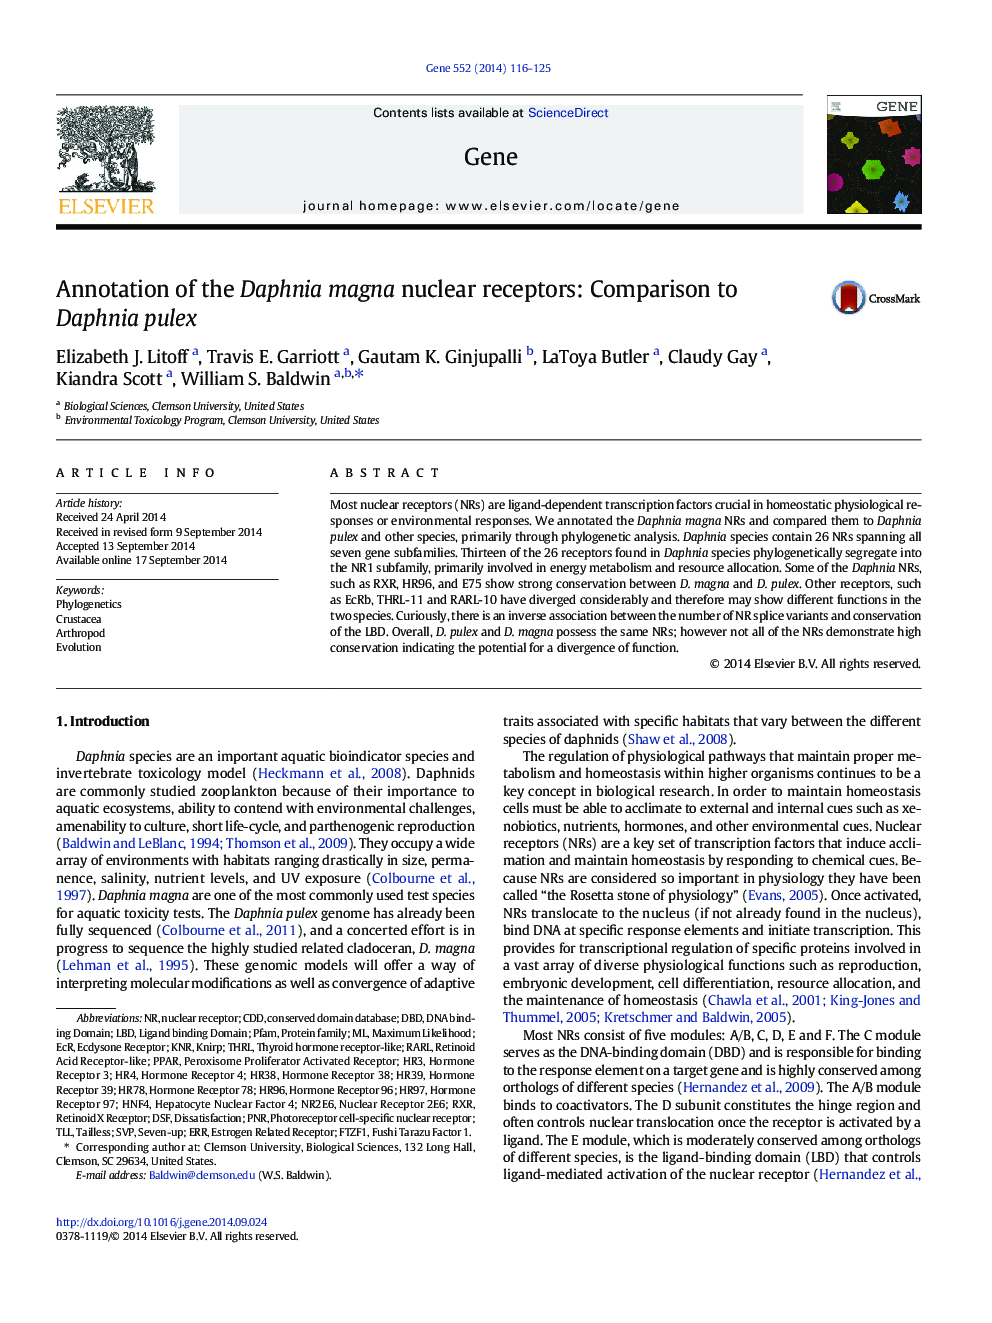 Annotation of the Daphnia magna nuclear receptors: Comparison to Daphnia pulex